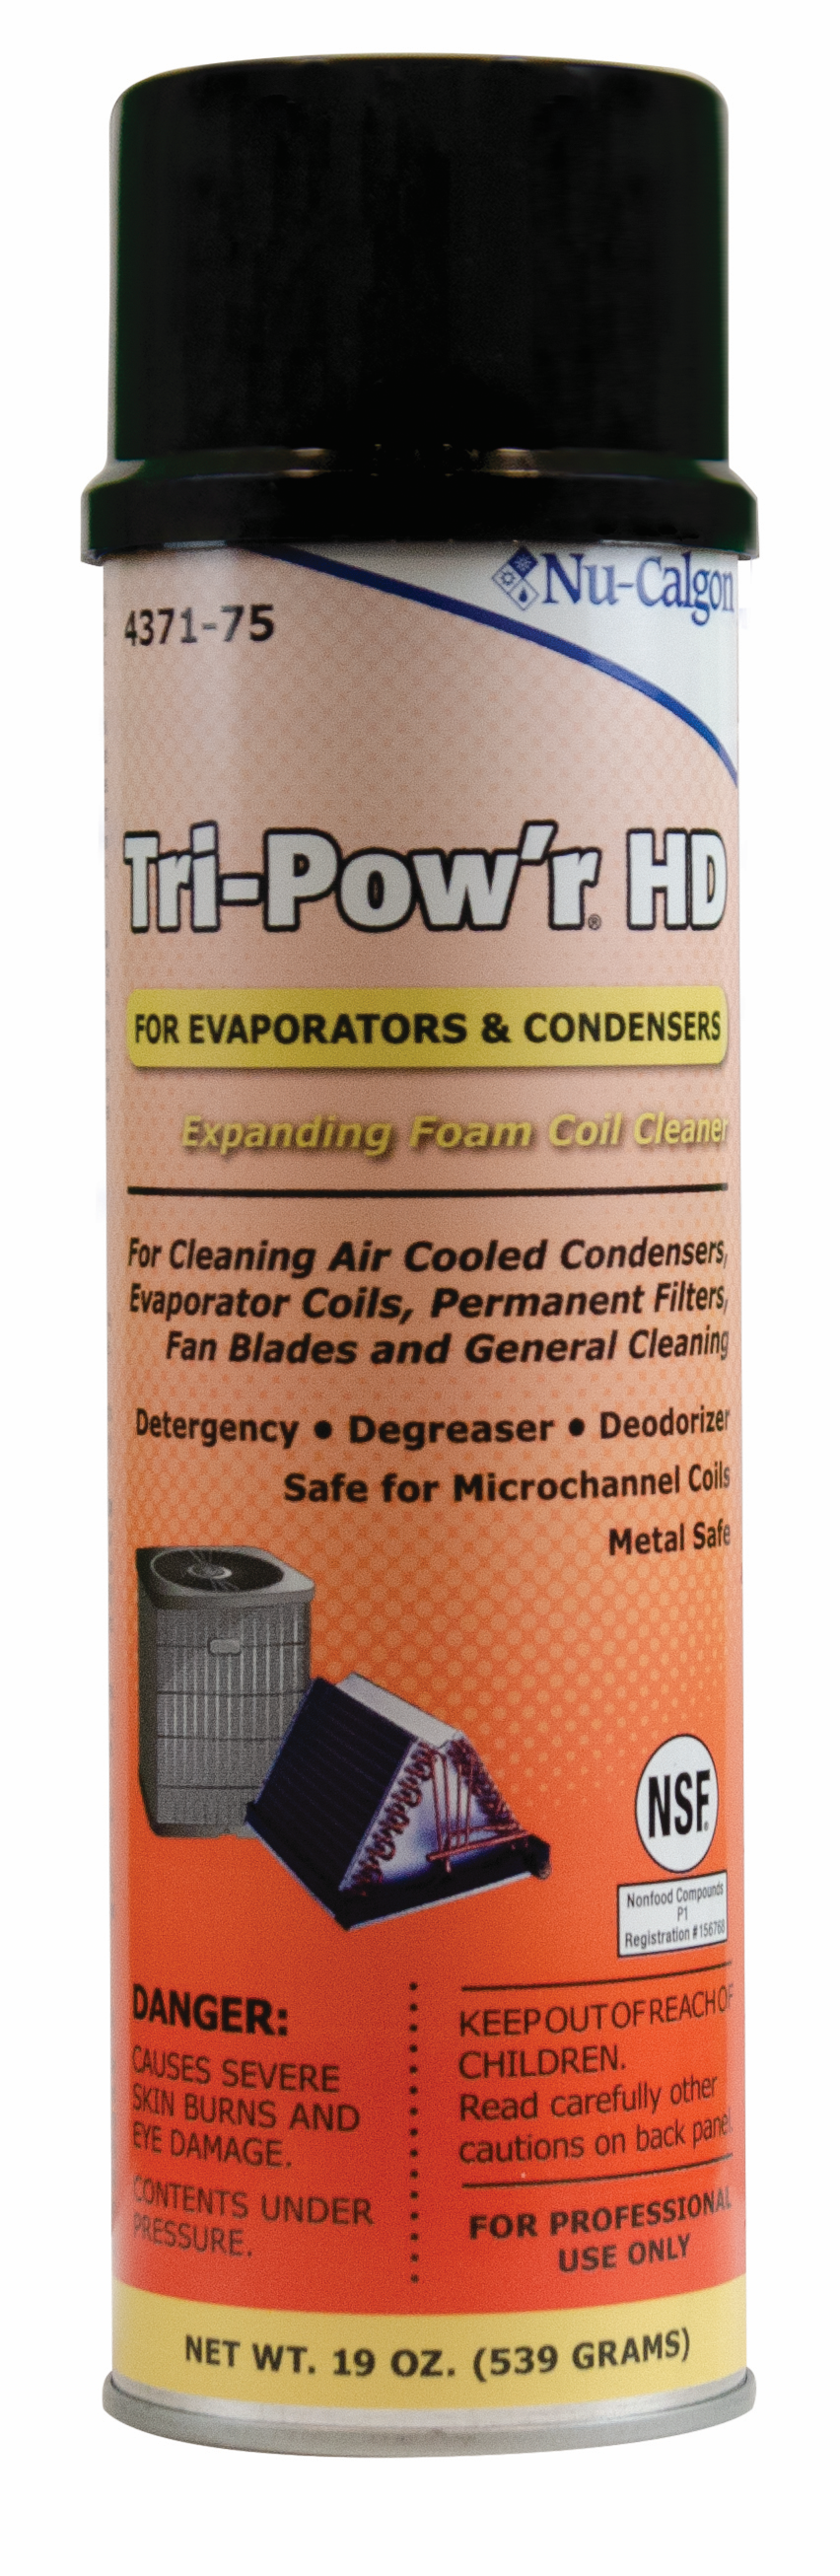 4371-75 TRI-POWR HD AEROSOL COIL CLEANE - Coil Cleaners